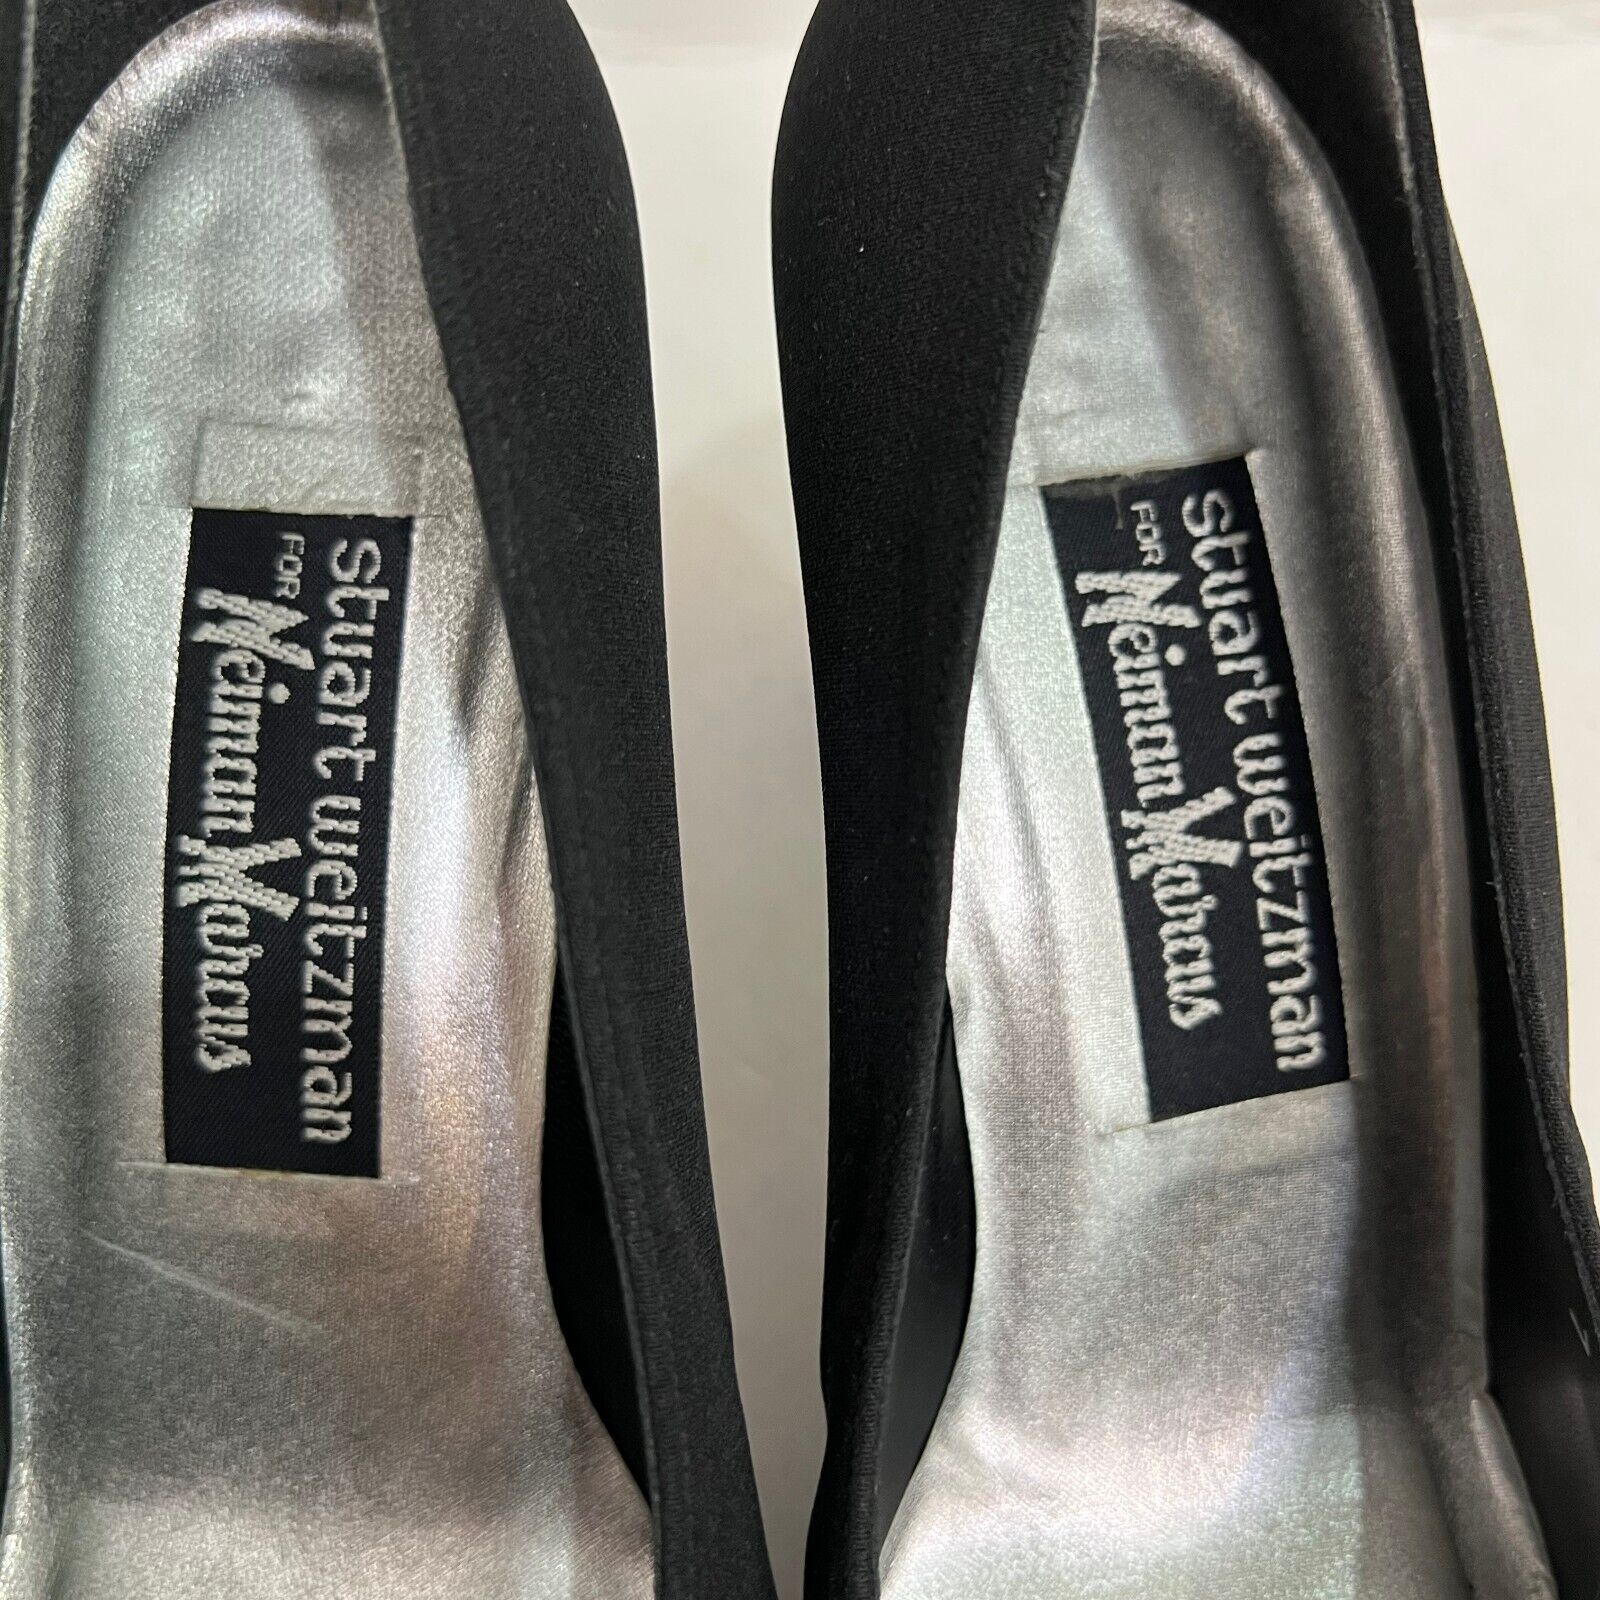 Stuart Weitzman Neiman Marcus Black High Heel Shoes Pumps w Rhinestones Size 6